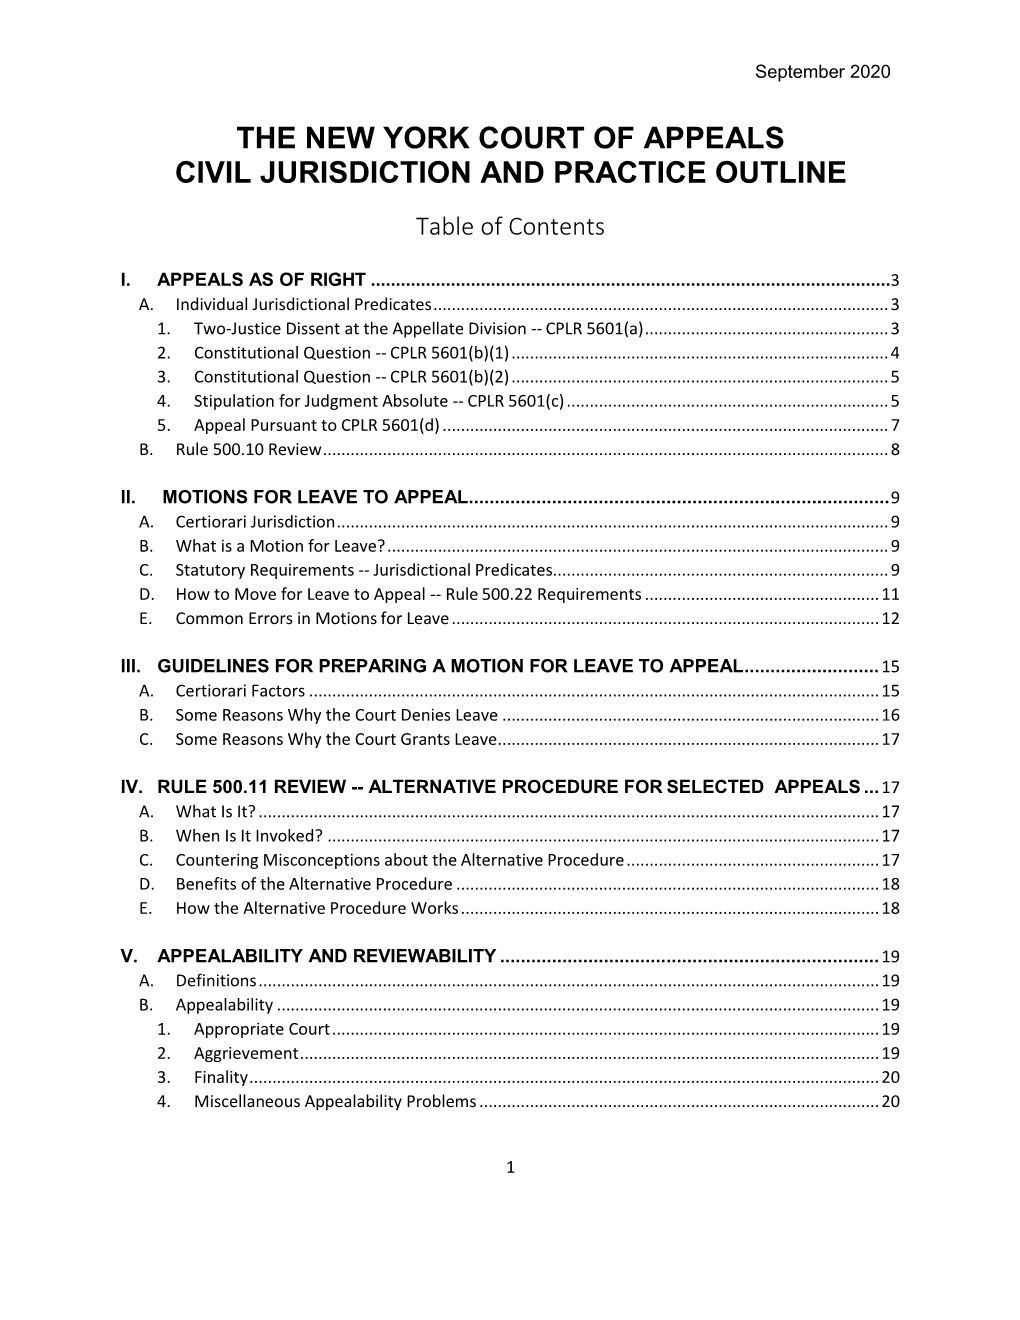 Civil Practice Outline